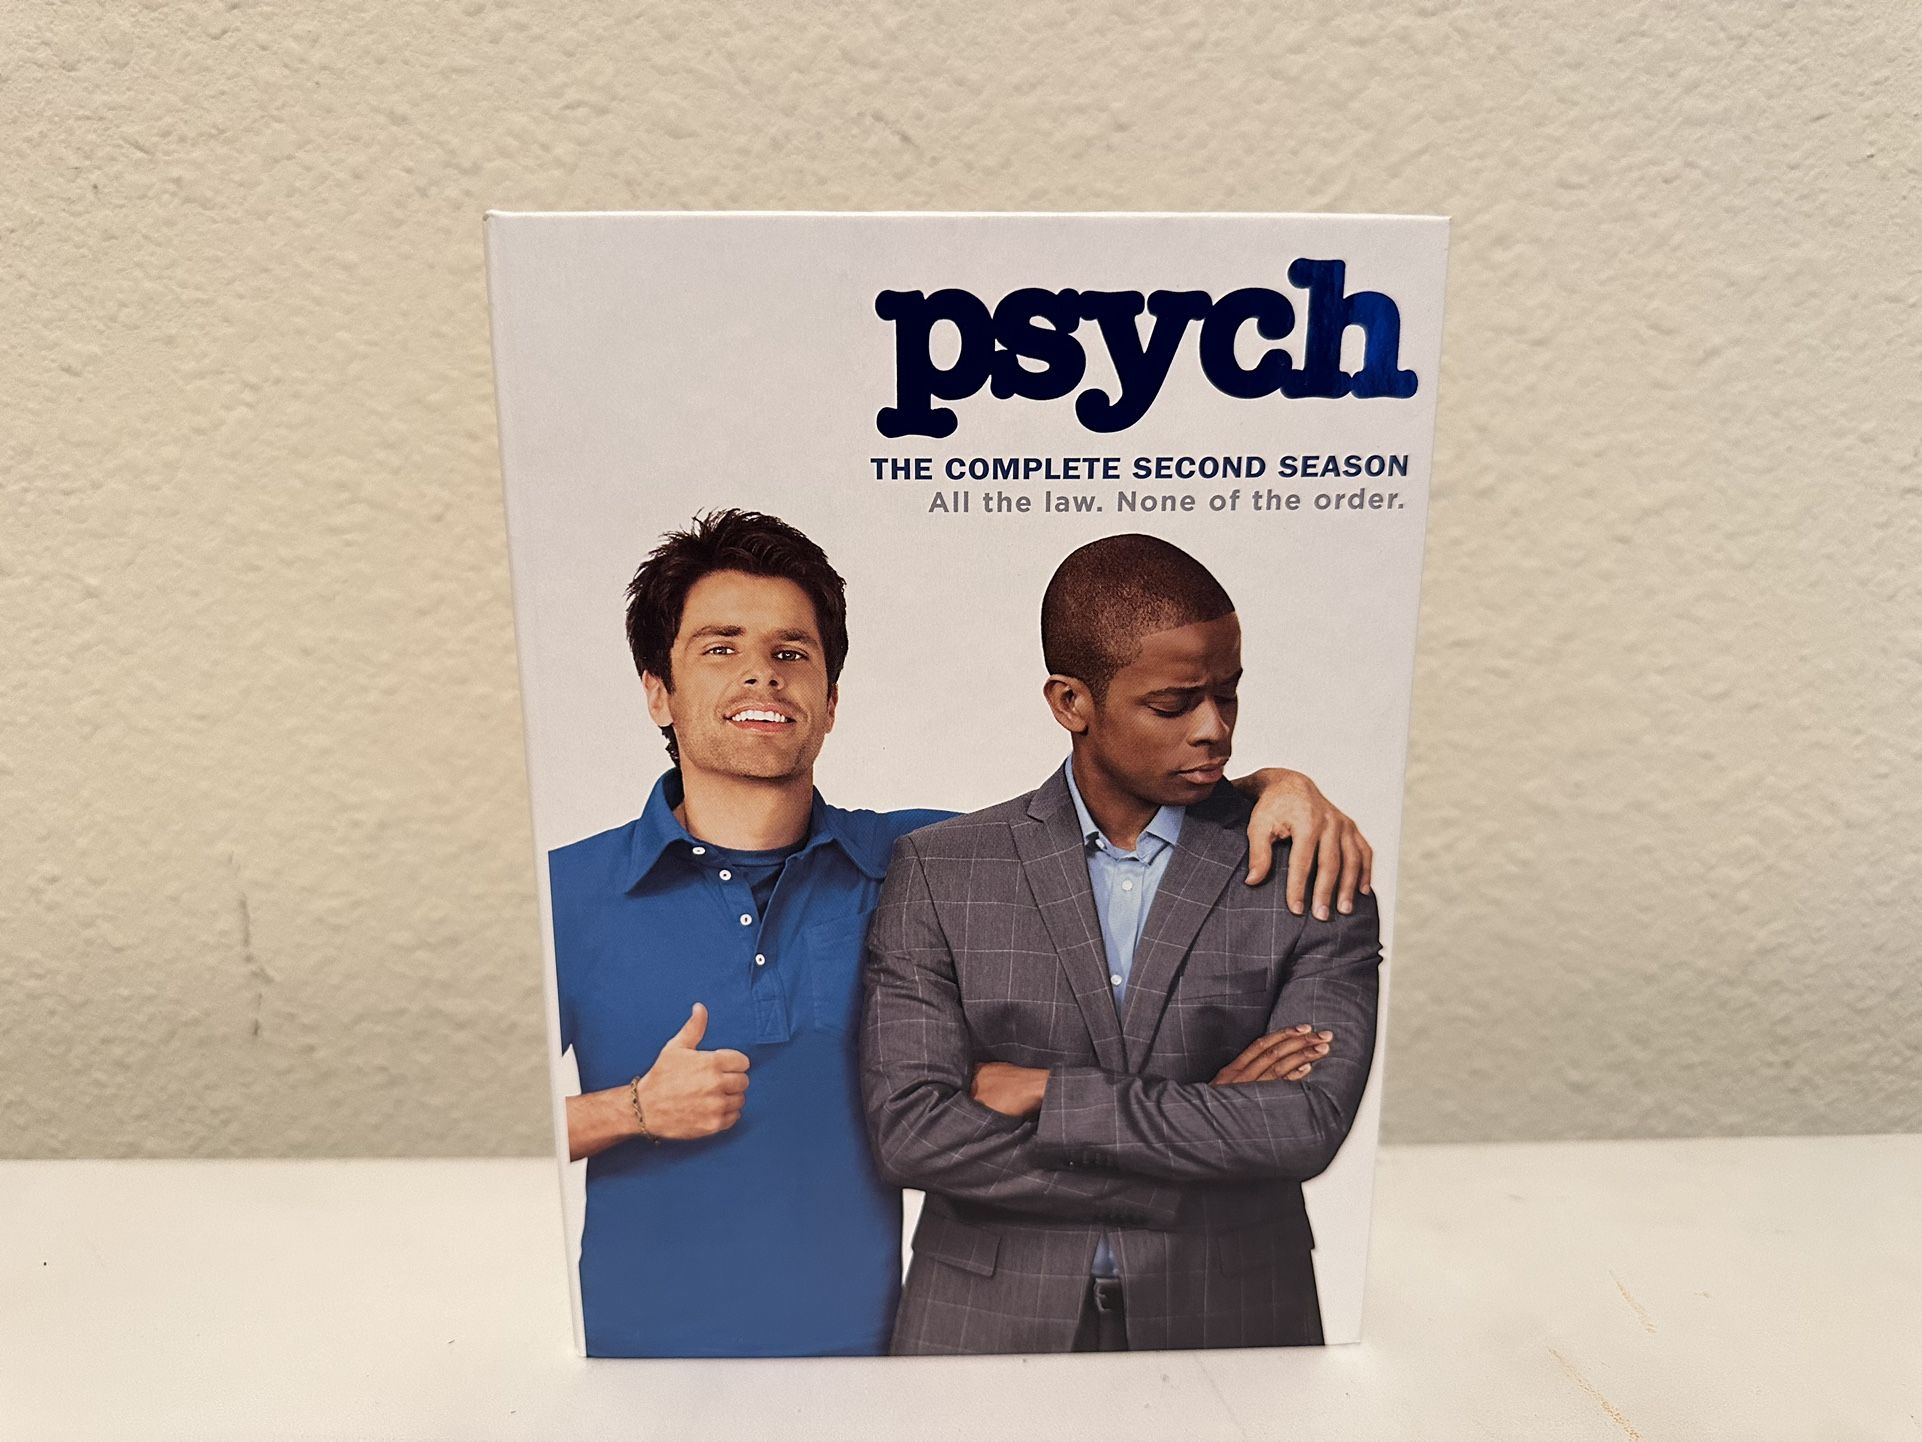 Chuck TV Series Season 1 (DVD) and Psych Season 2 (DVD)